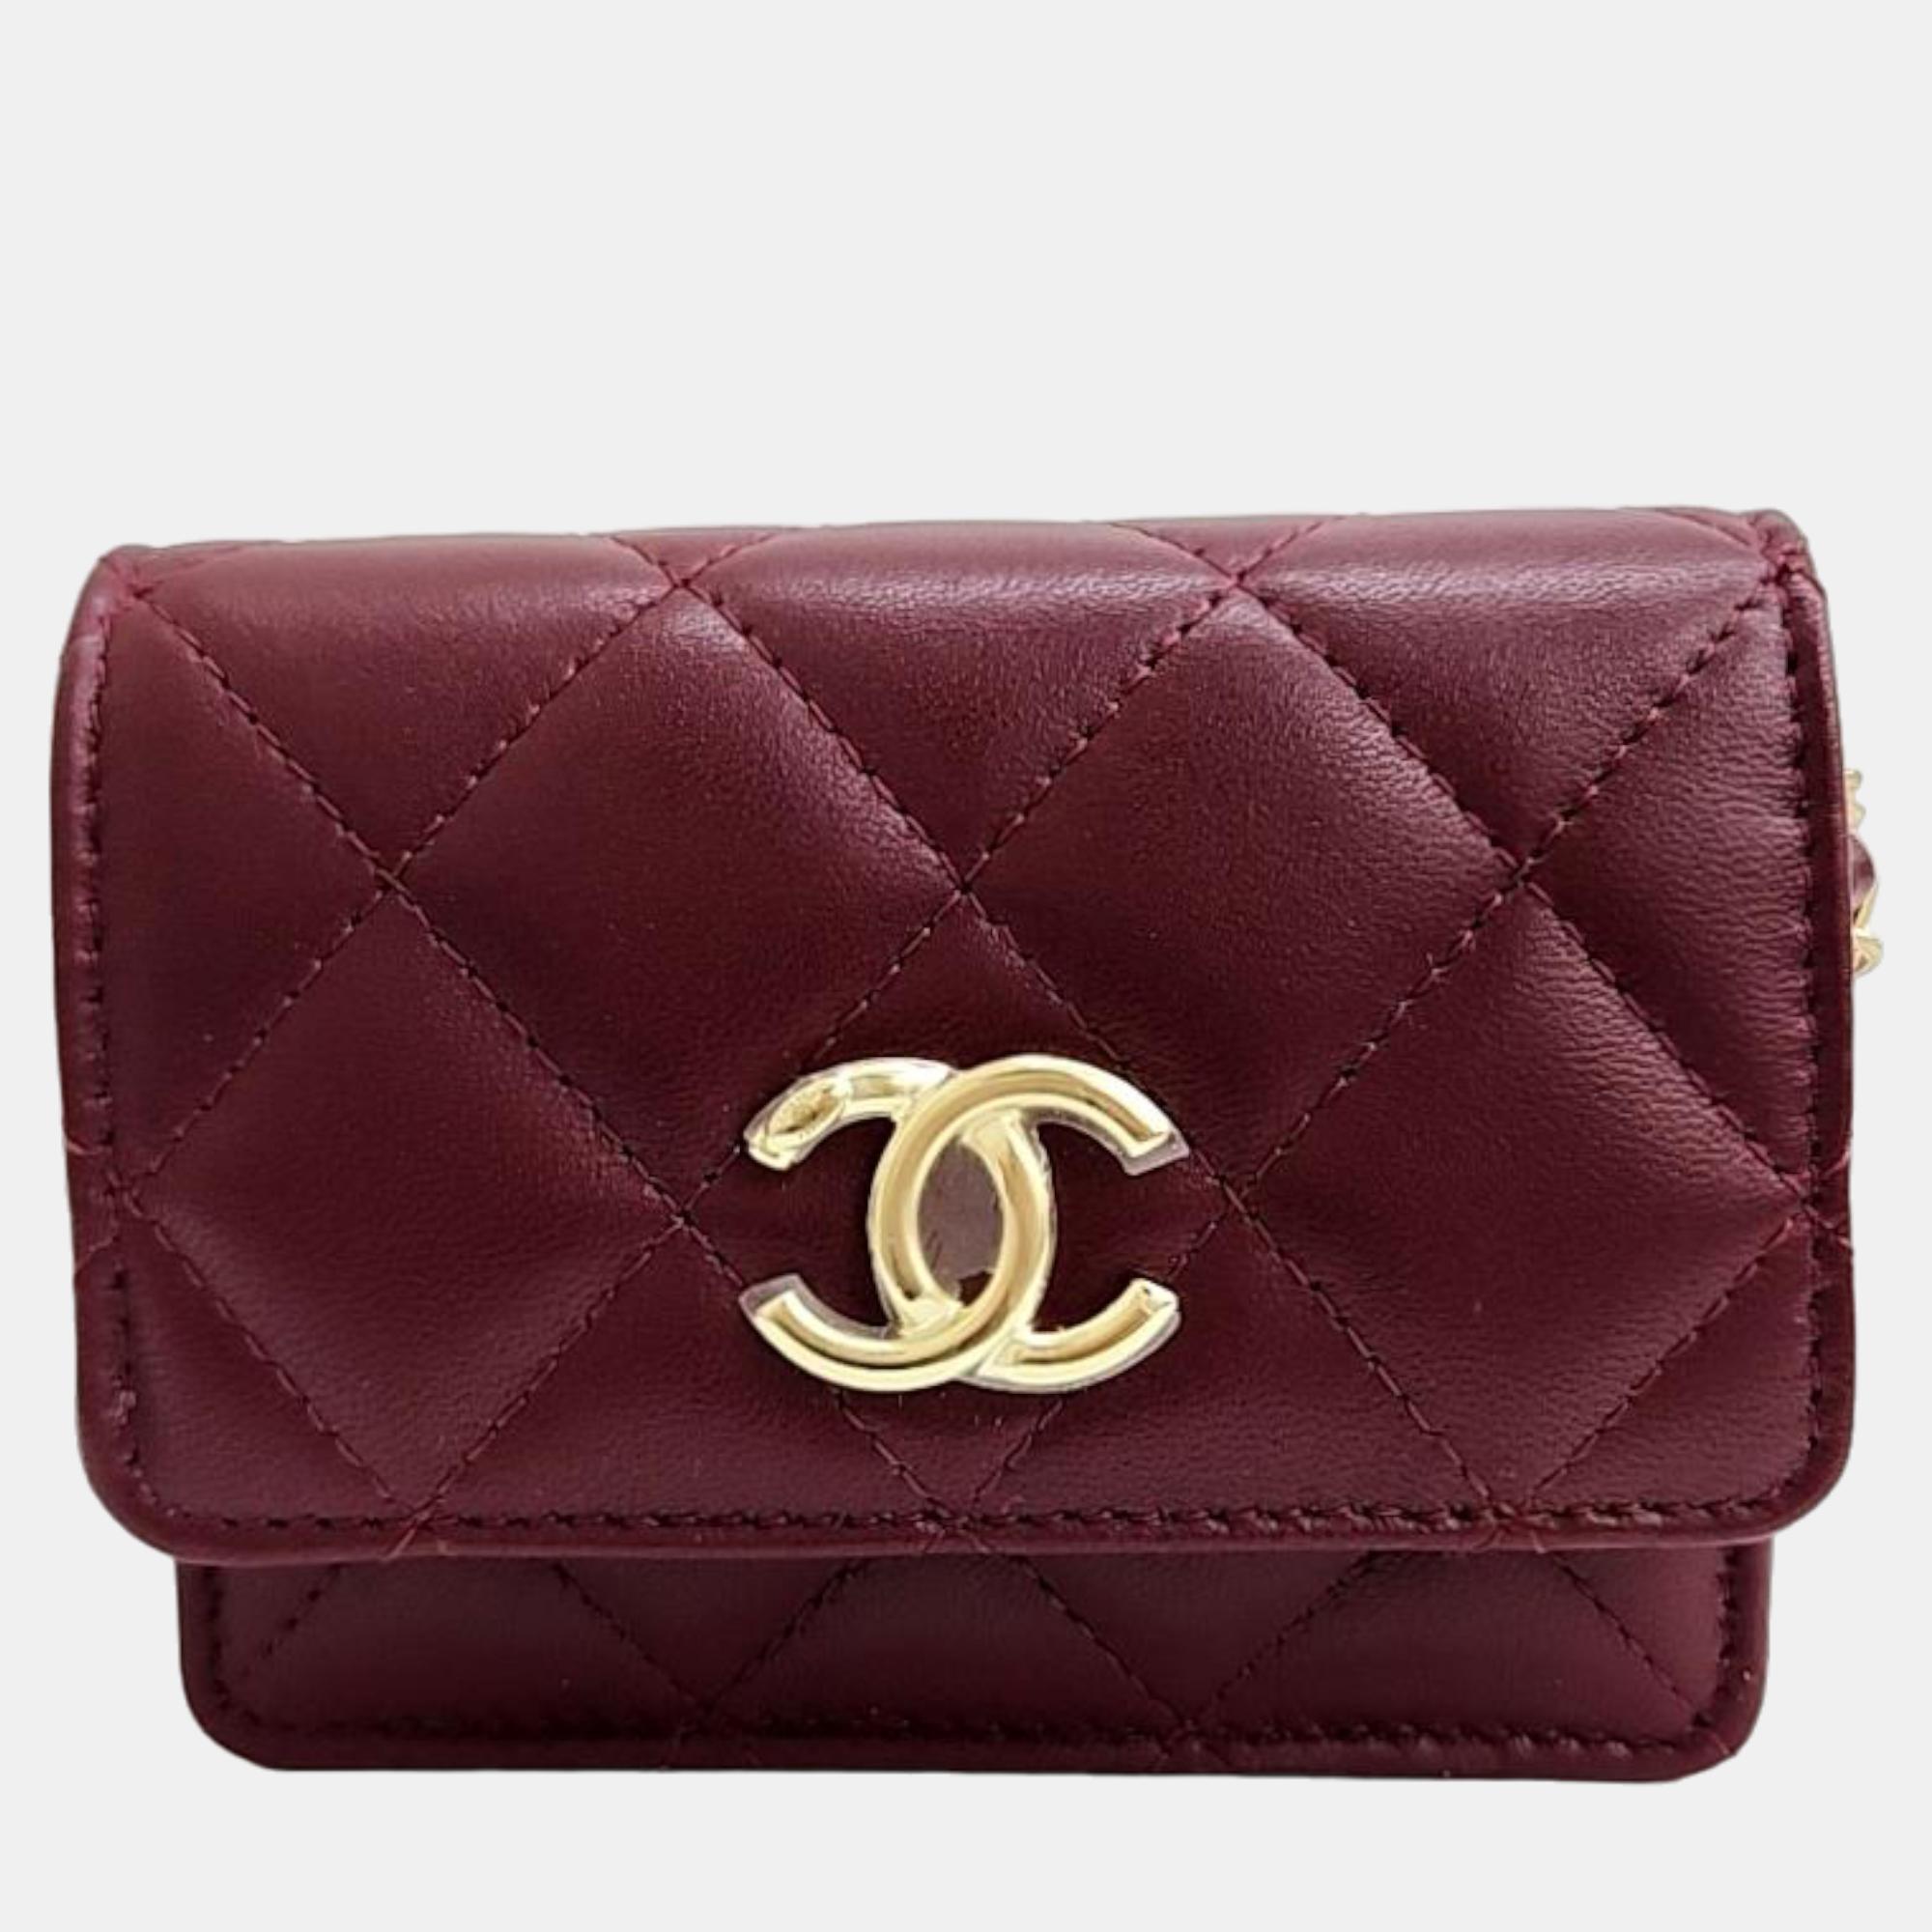 Chanel Burgundy Lambskin Leather CC Chain Accordion Wallet